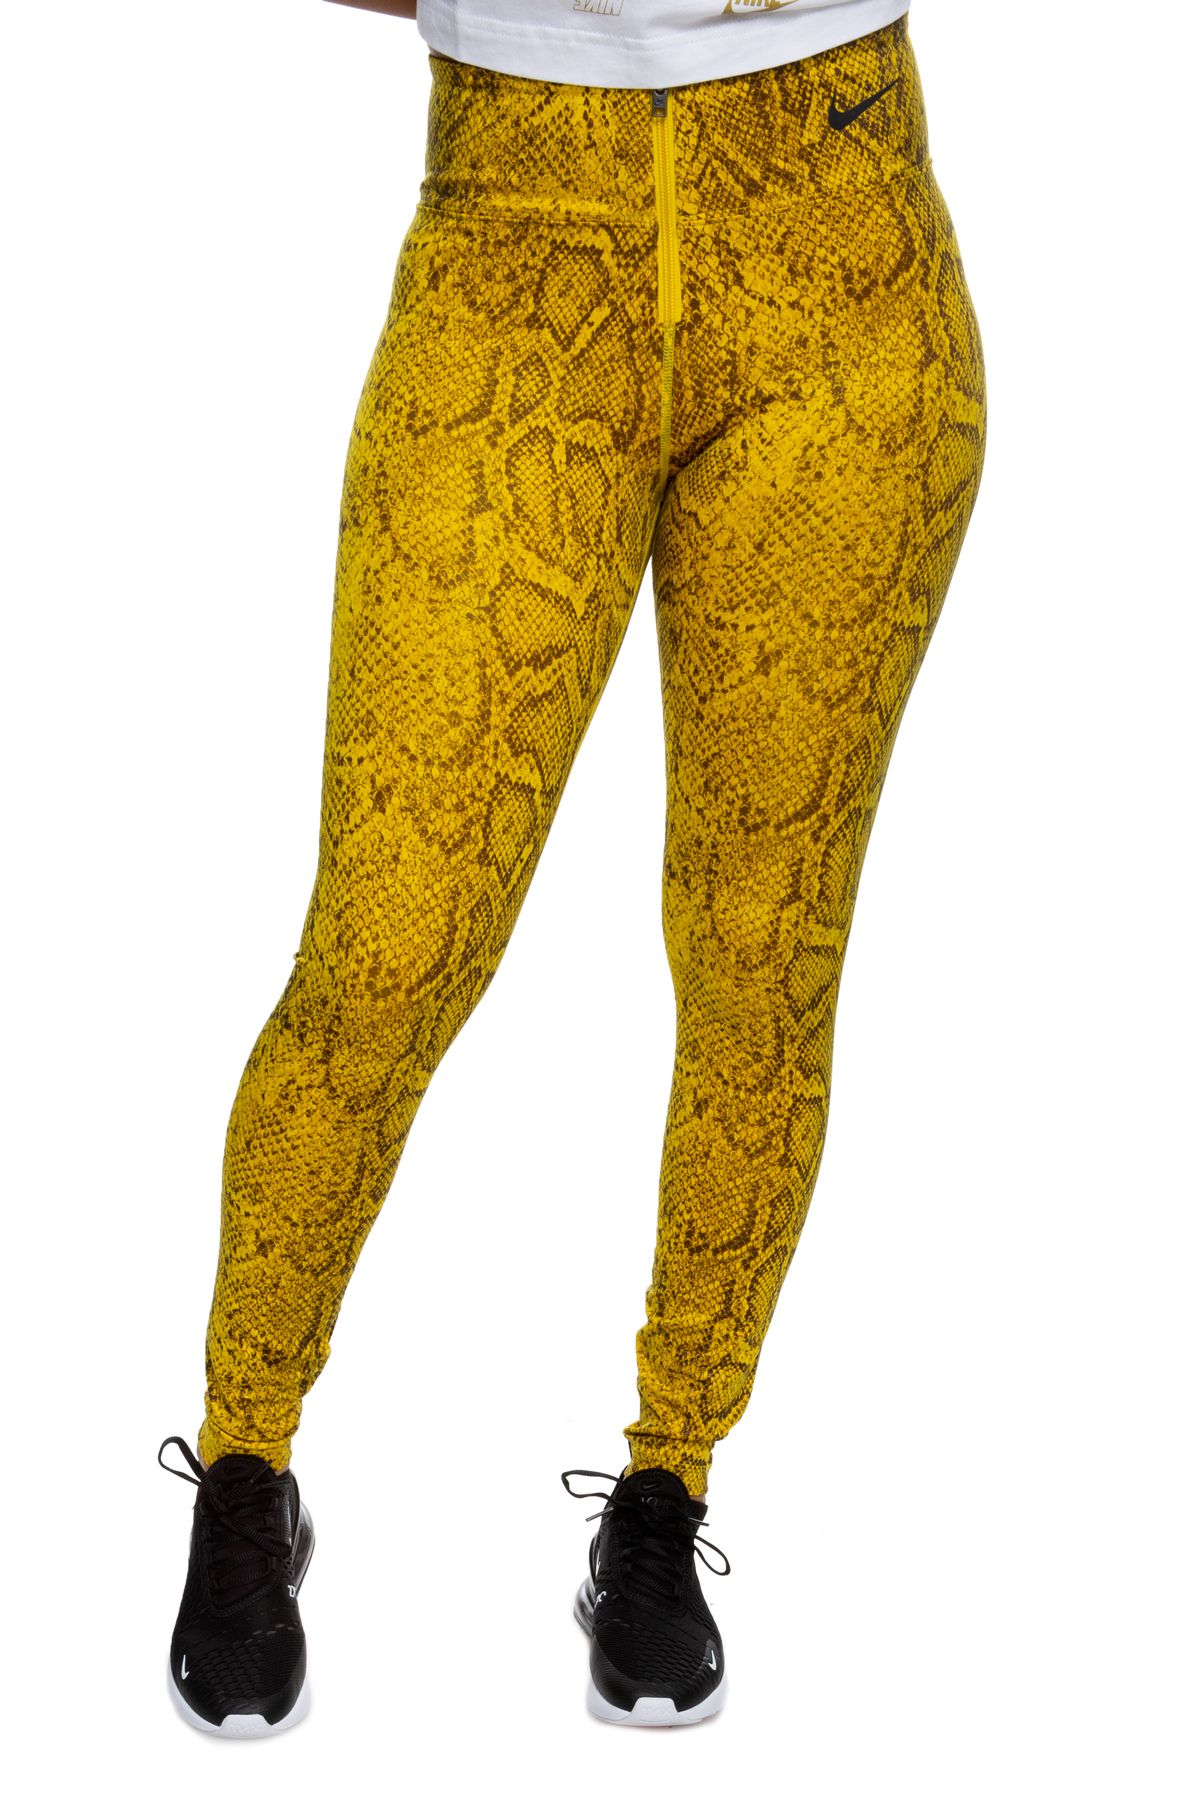 nike yellow snakeskin leggings